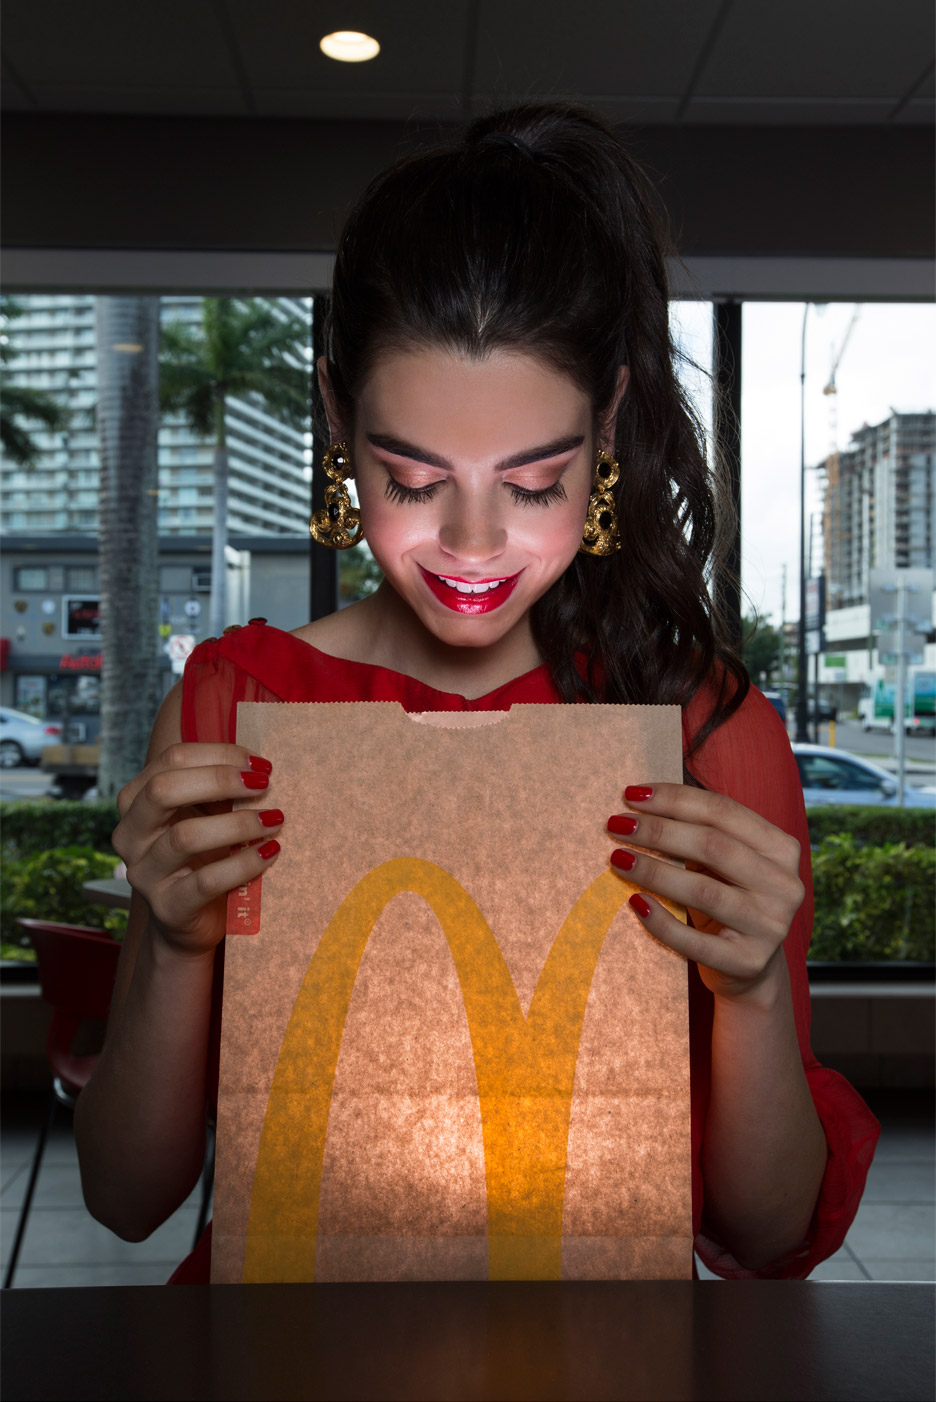 McDonalds 2016 rebrand